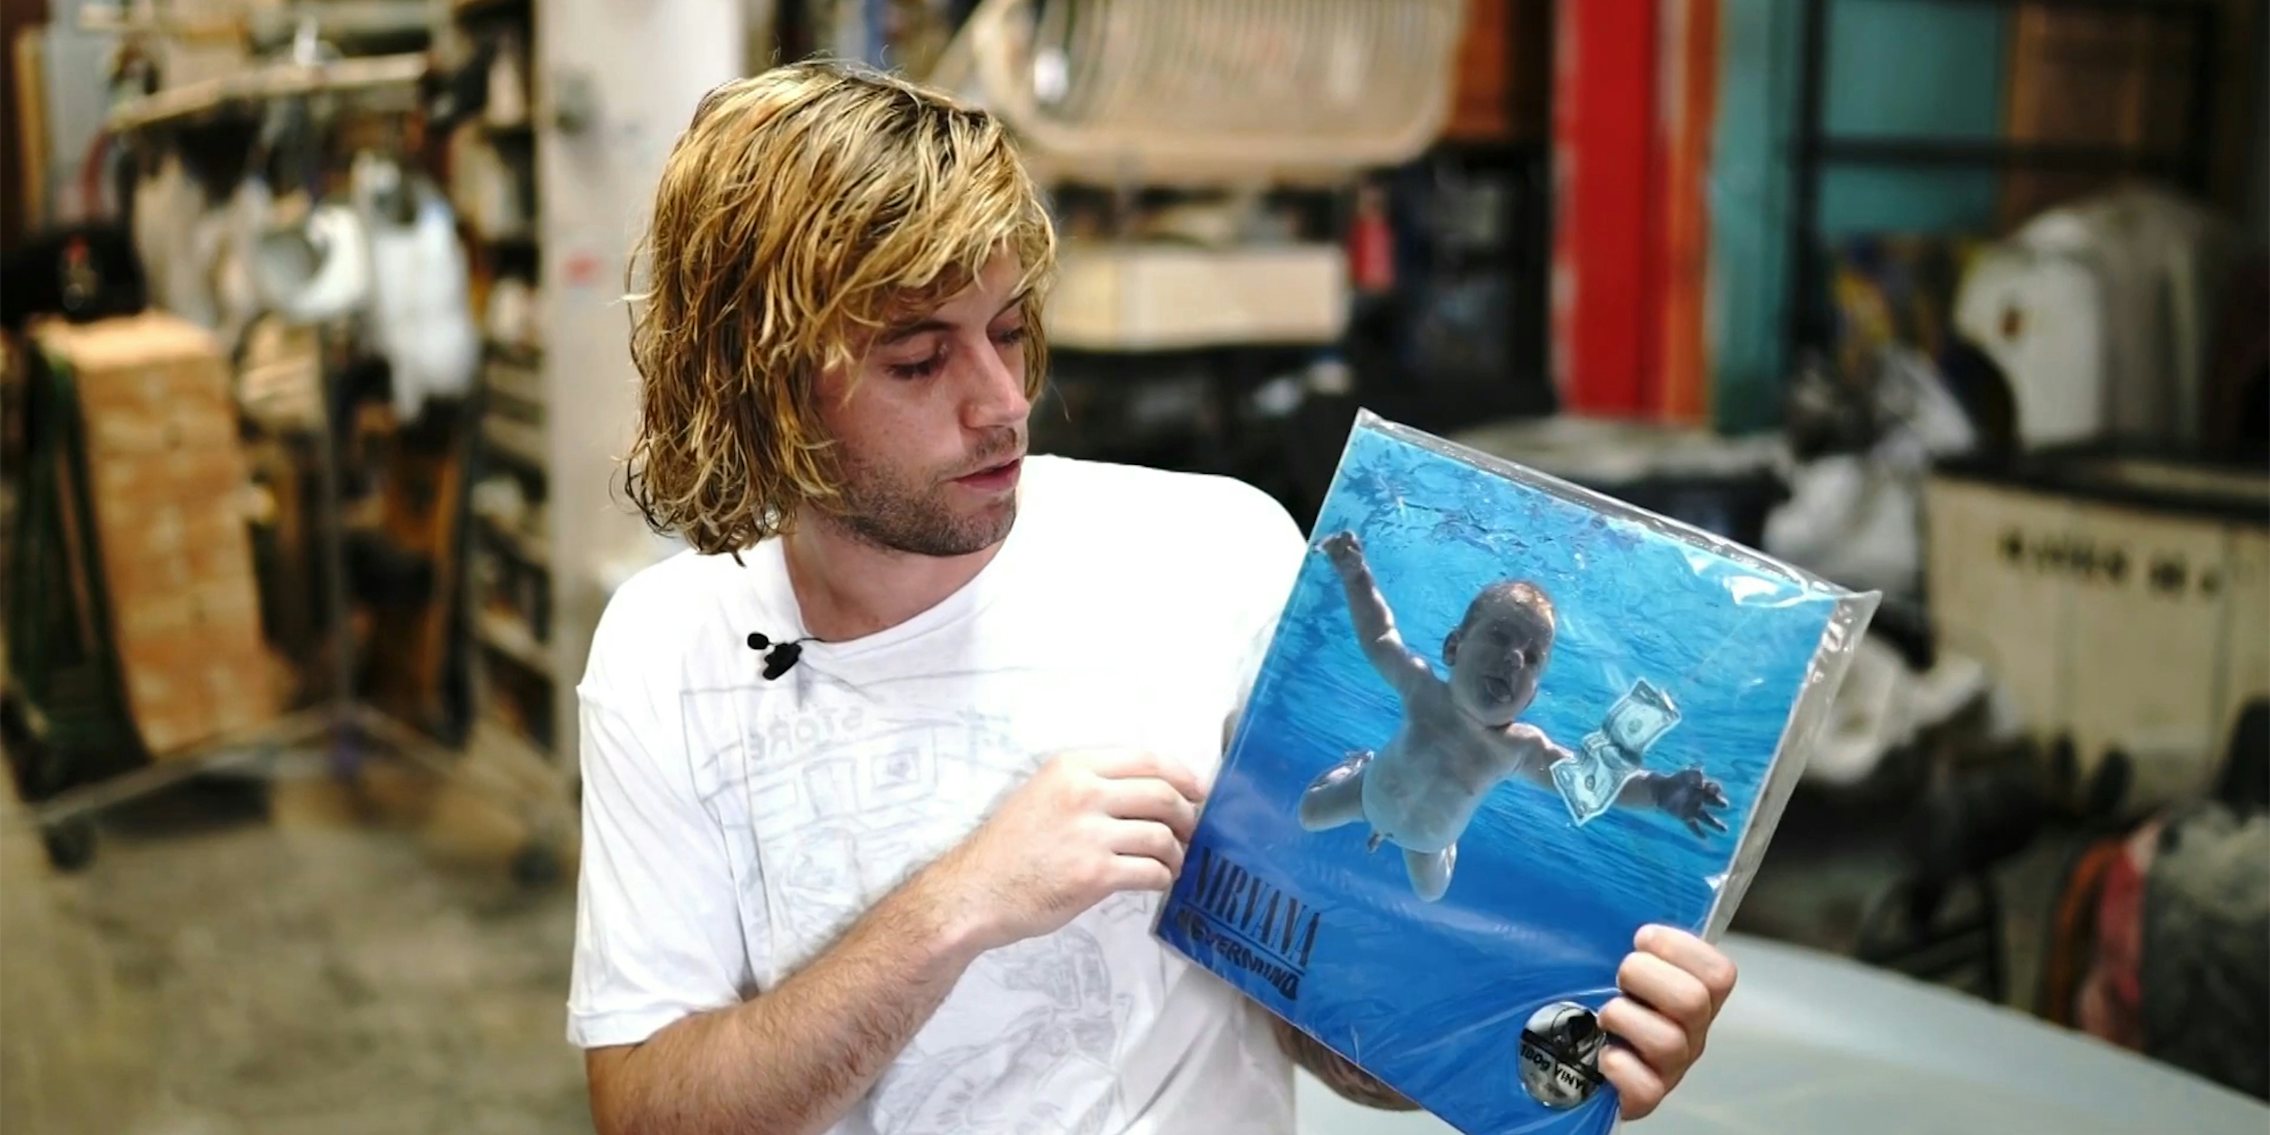 A man holding a vinyl record.